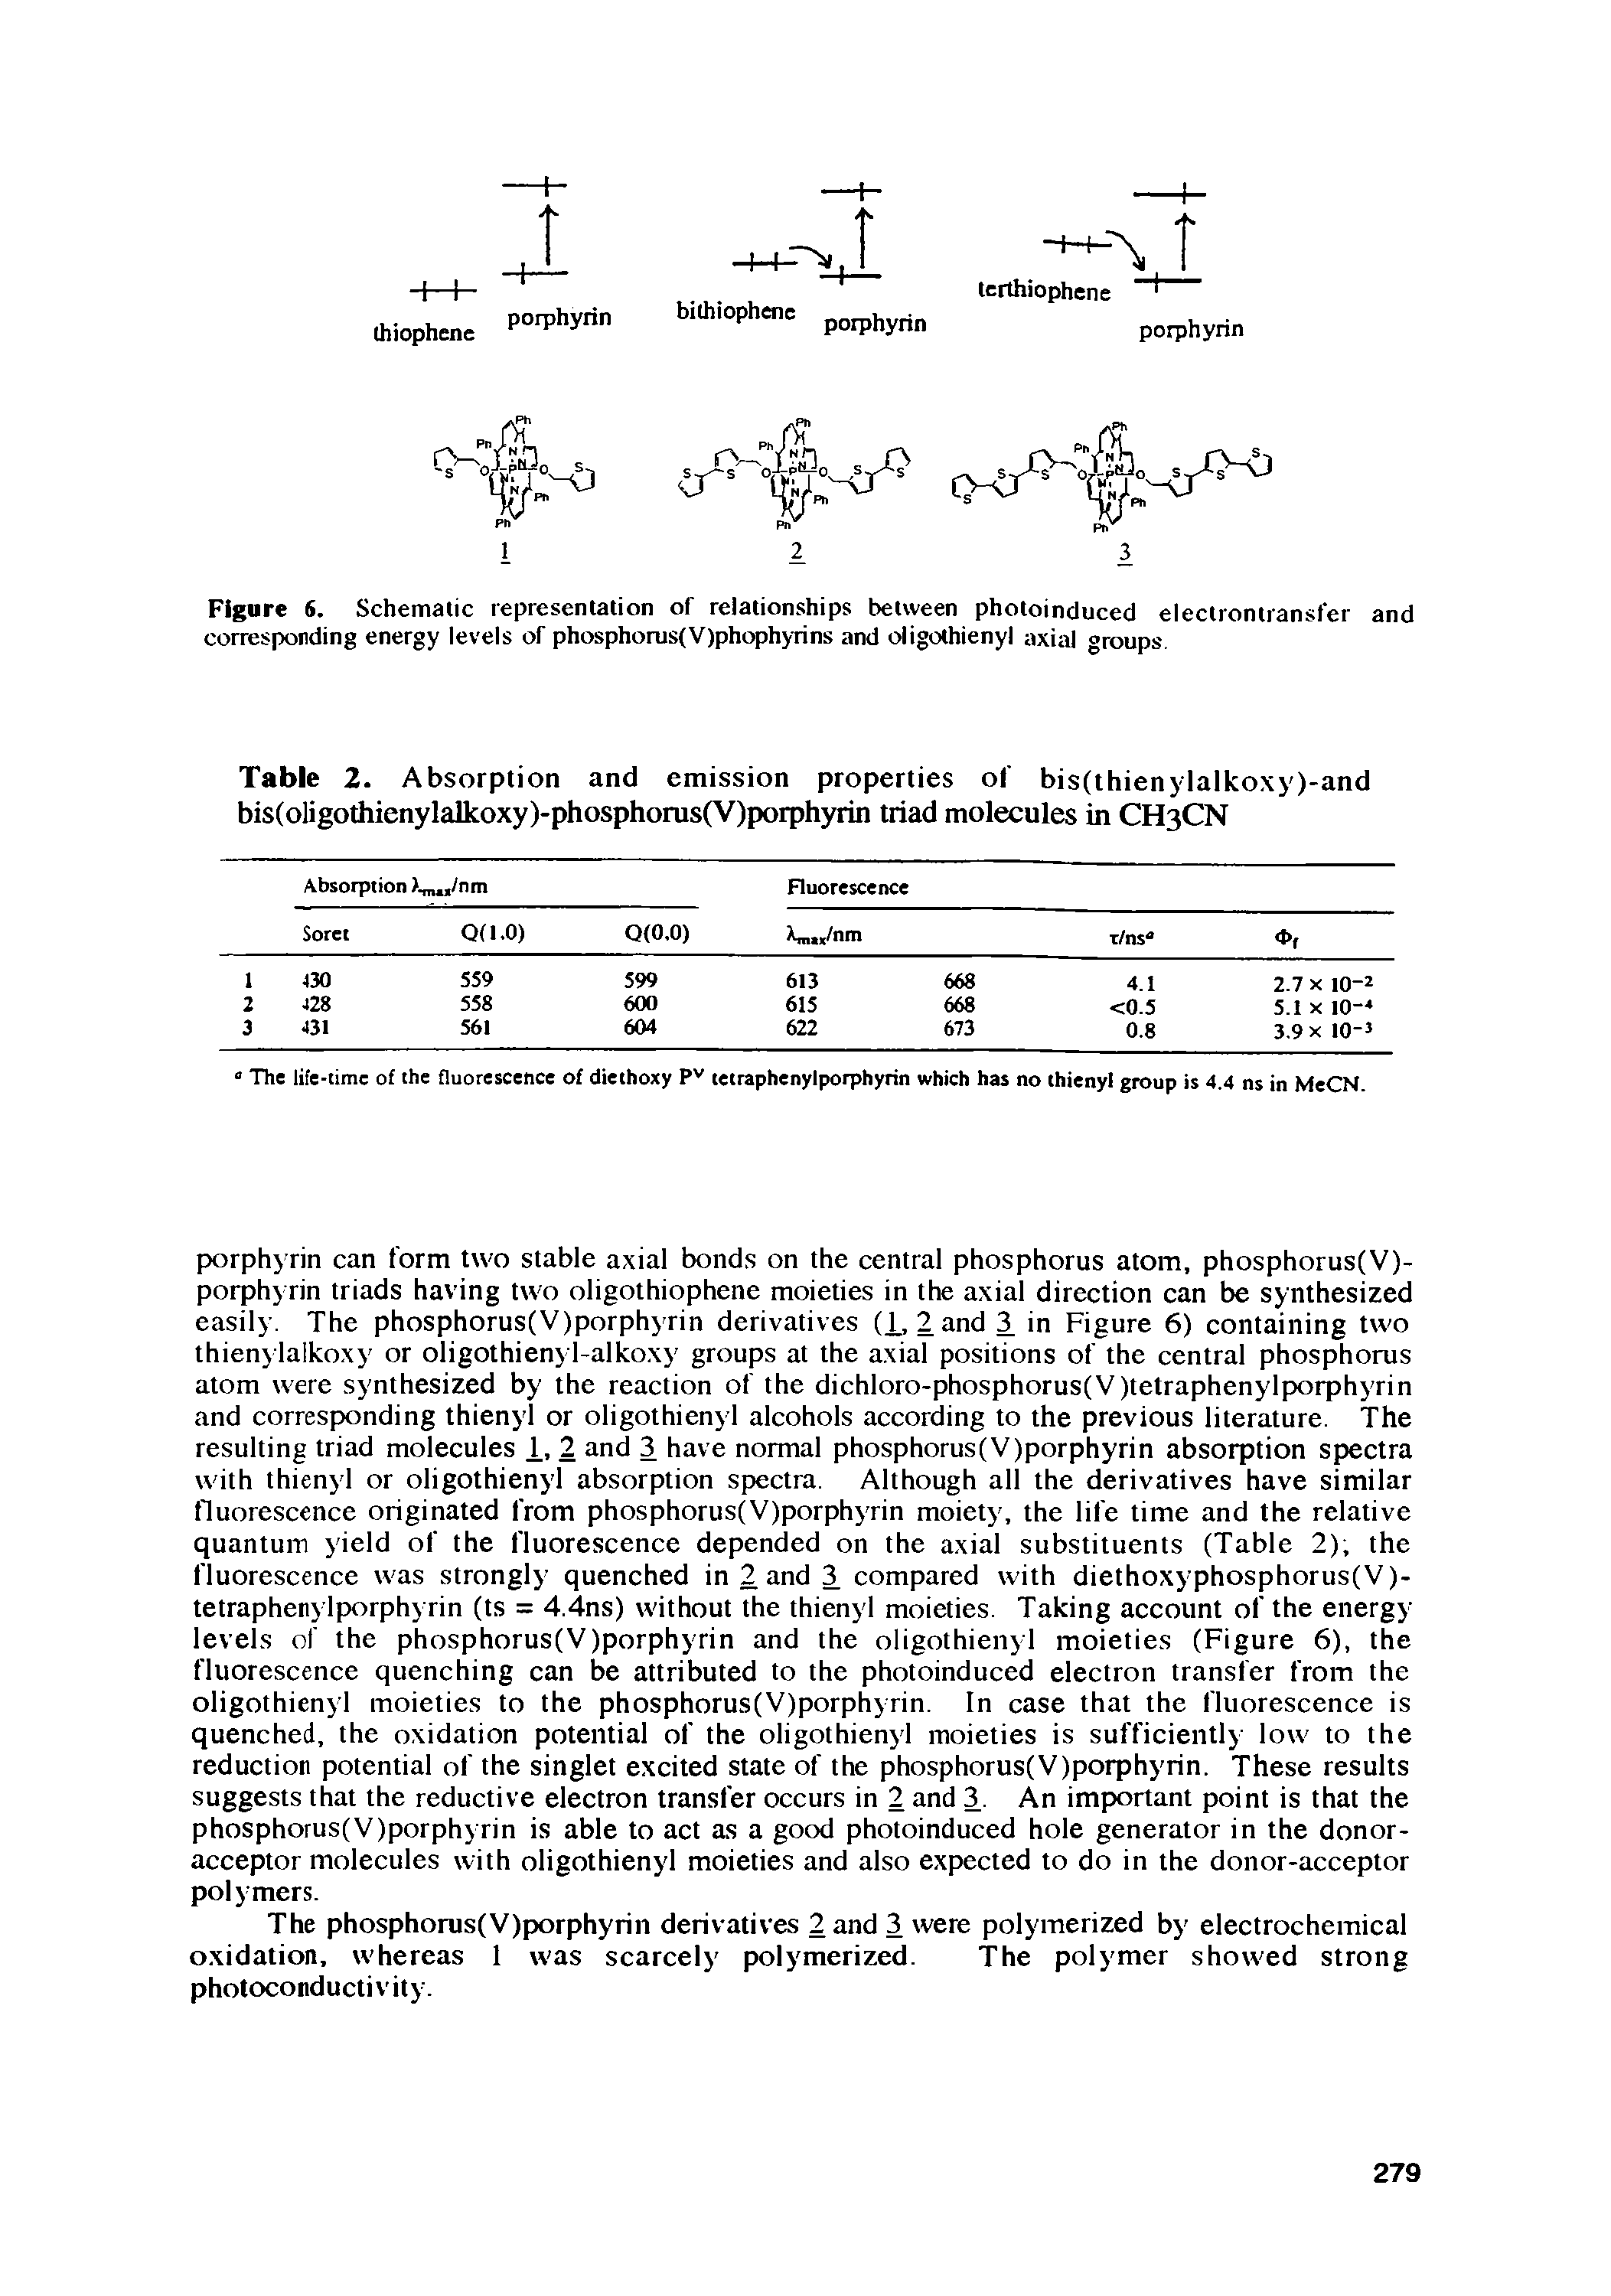 Table 2. Absorption and emission properties of bis(thienylalko y)-and bis(oligothienylalkoxy)-phosphorus(V)porphyrin triad molecules in CH3CN...